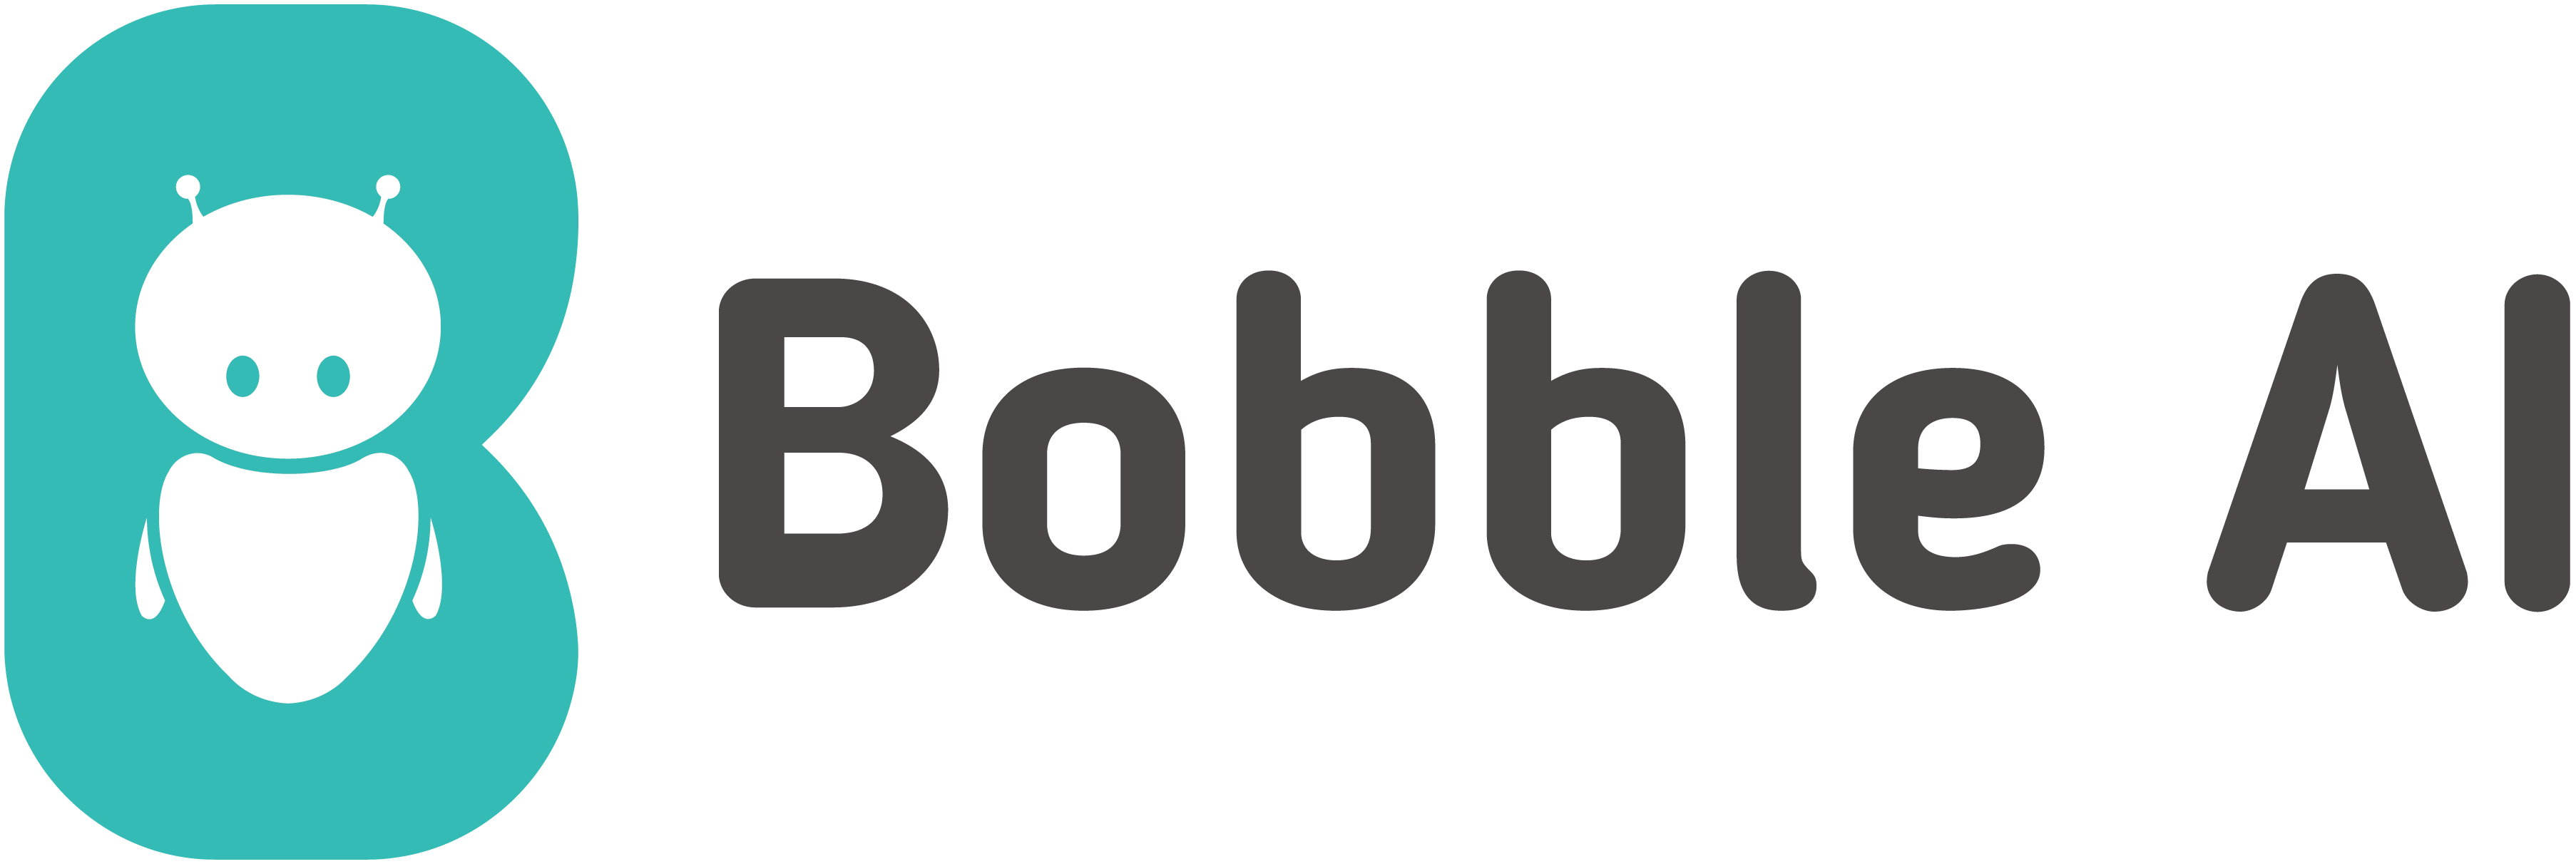 bobble-logo